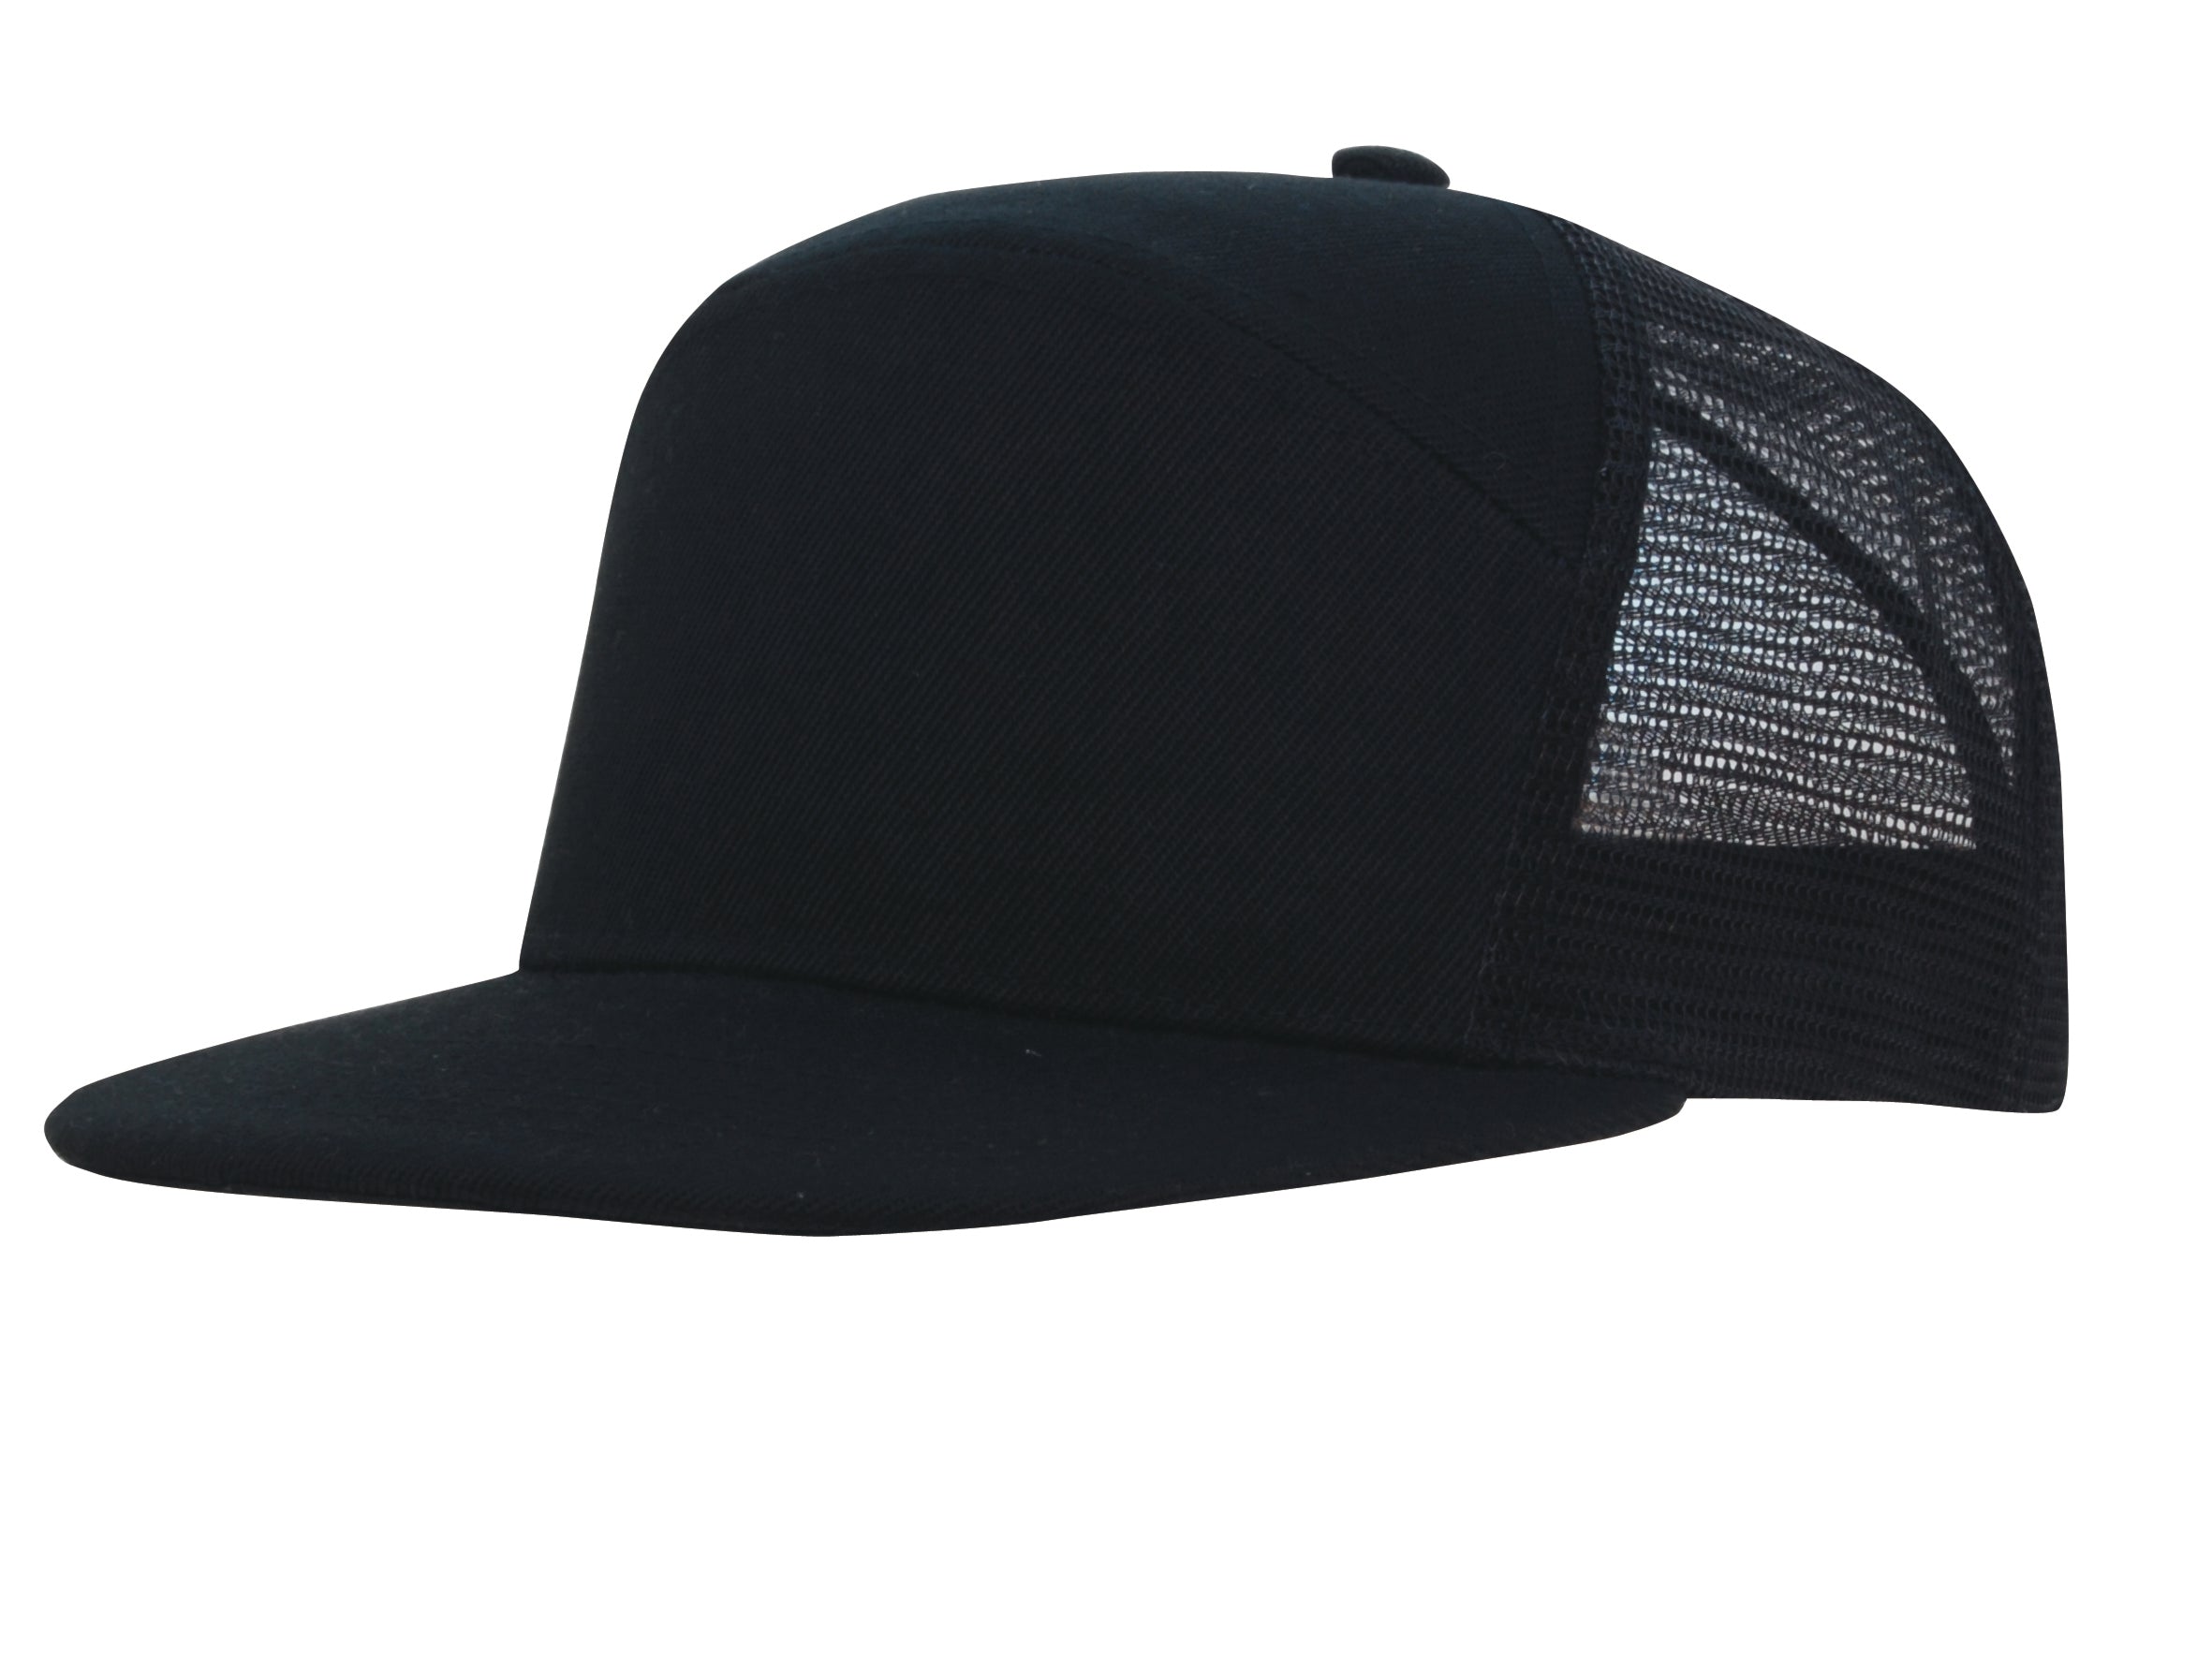 Headwear Frame Pa Twill Mesh Back Cap X12 - 4154 Cap Headwear Professionals Black One Size 